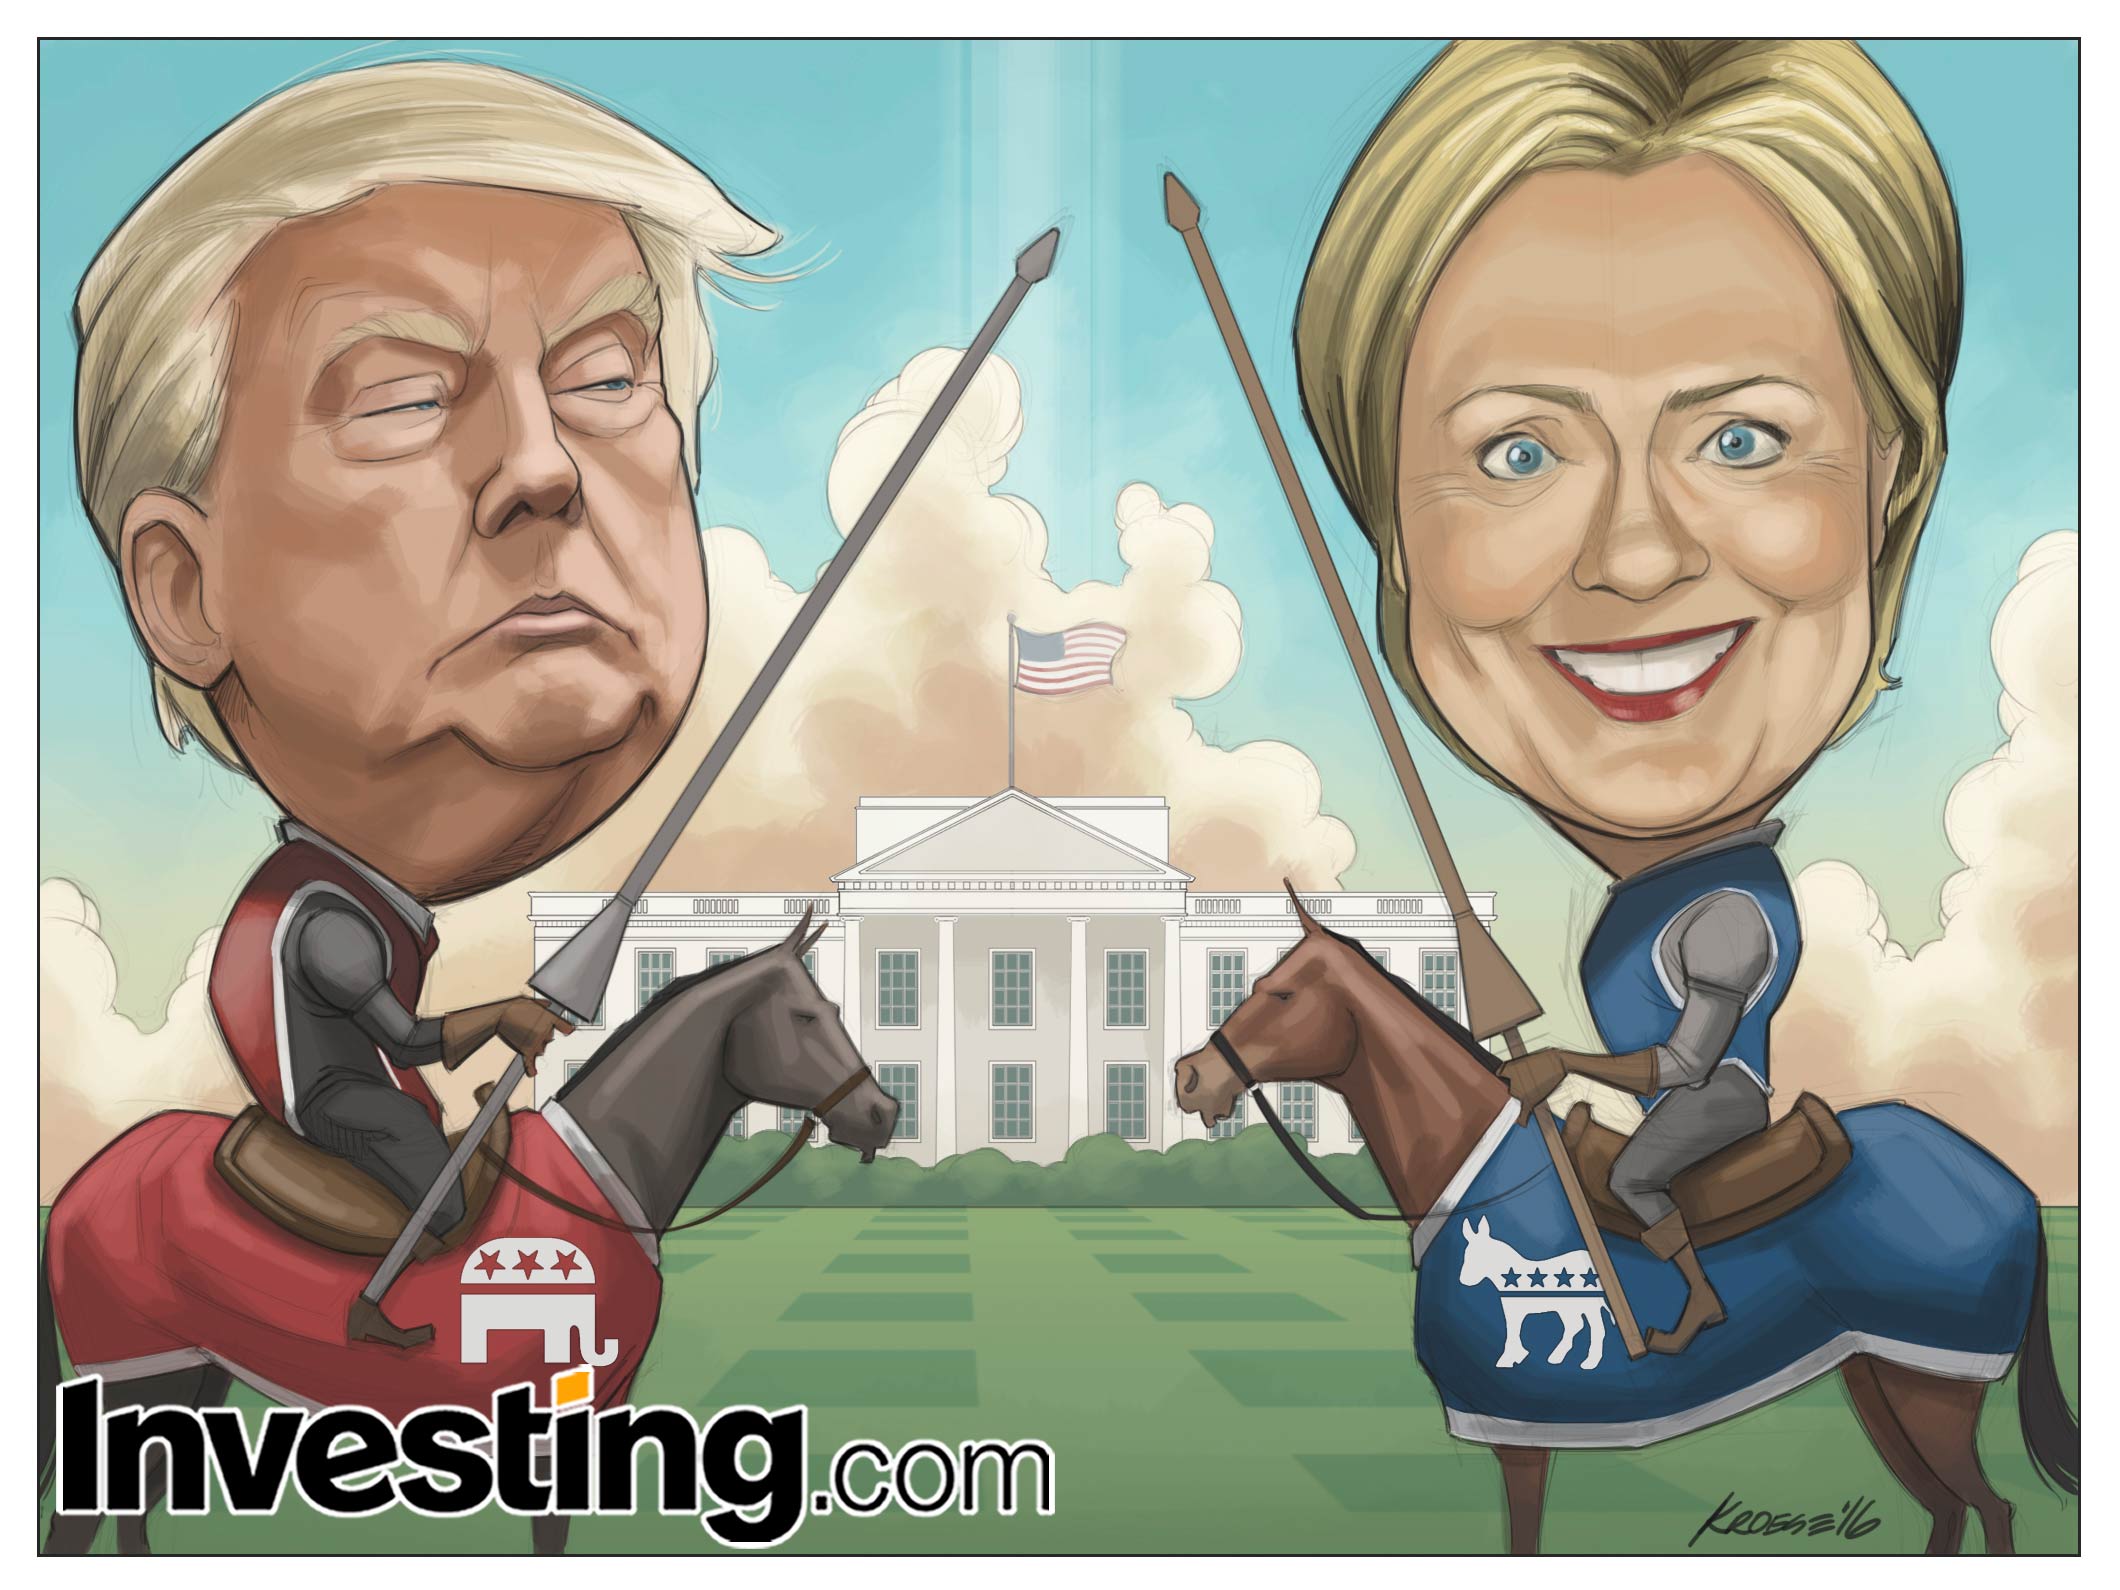 The U.S. presidential race has begun. Trump vs Hillary - who will be the winner?  